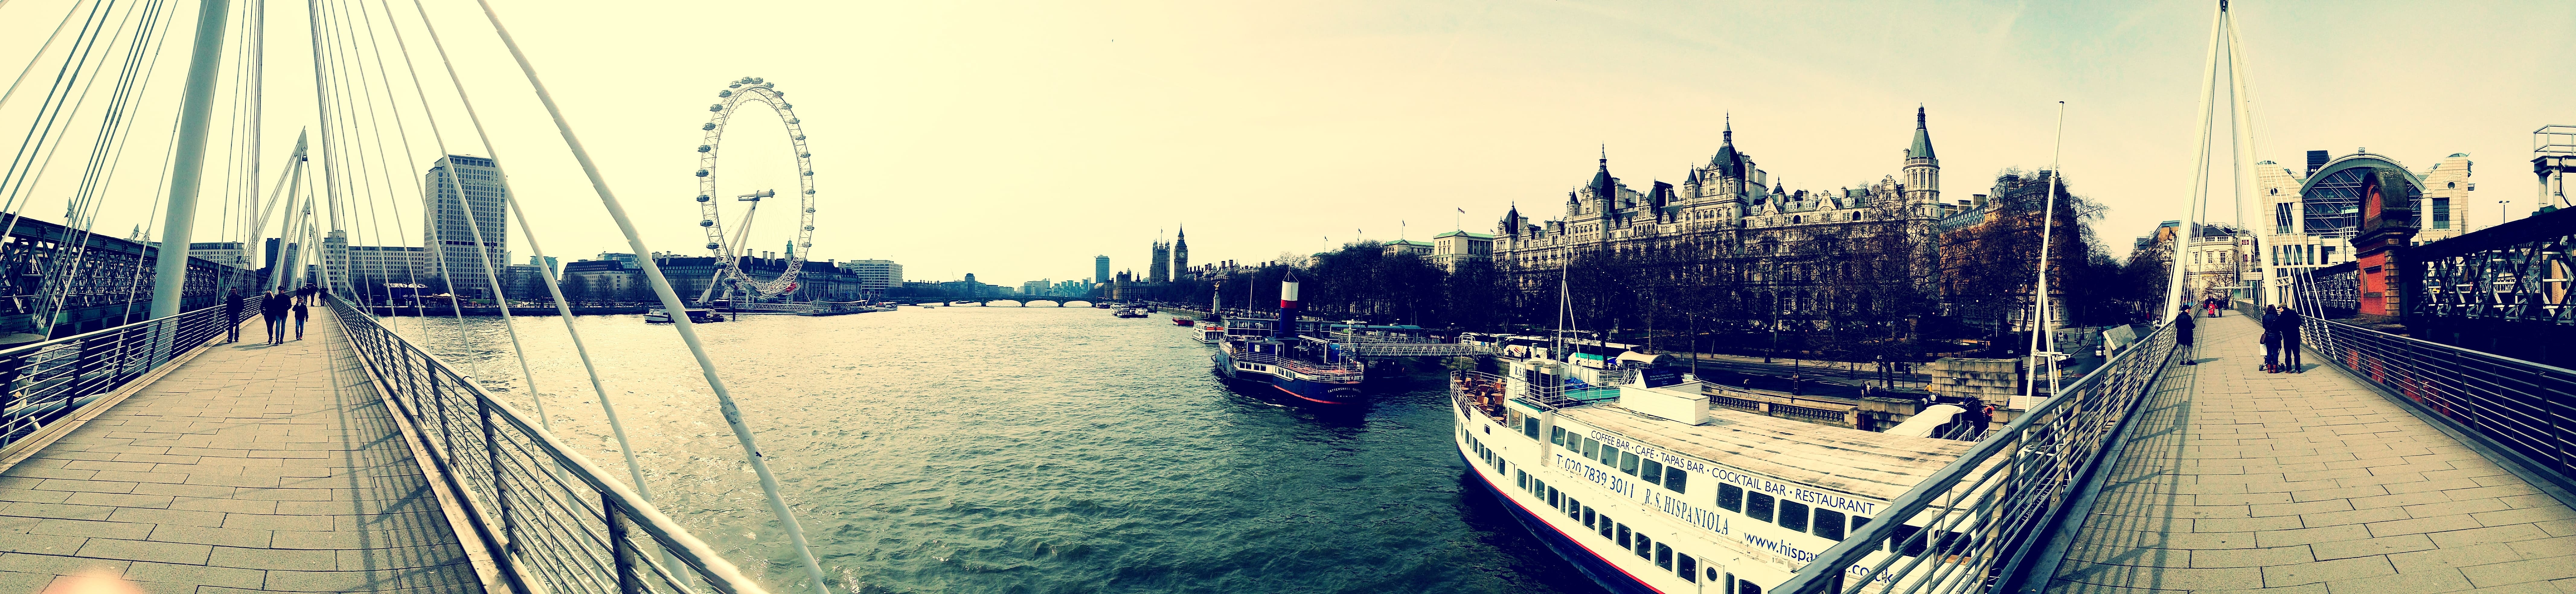 Londra panoramica